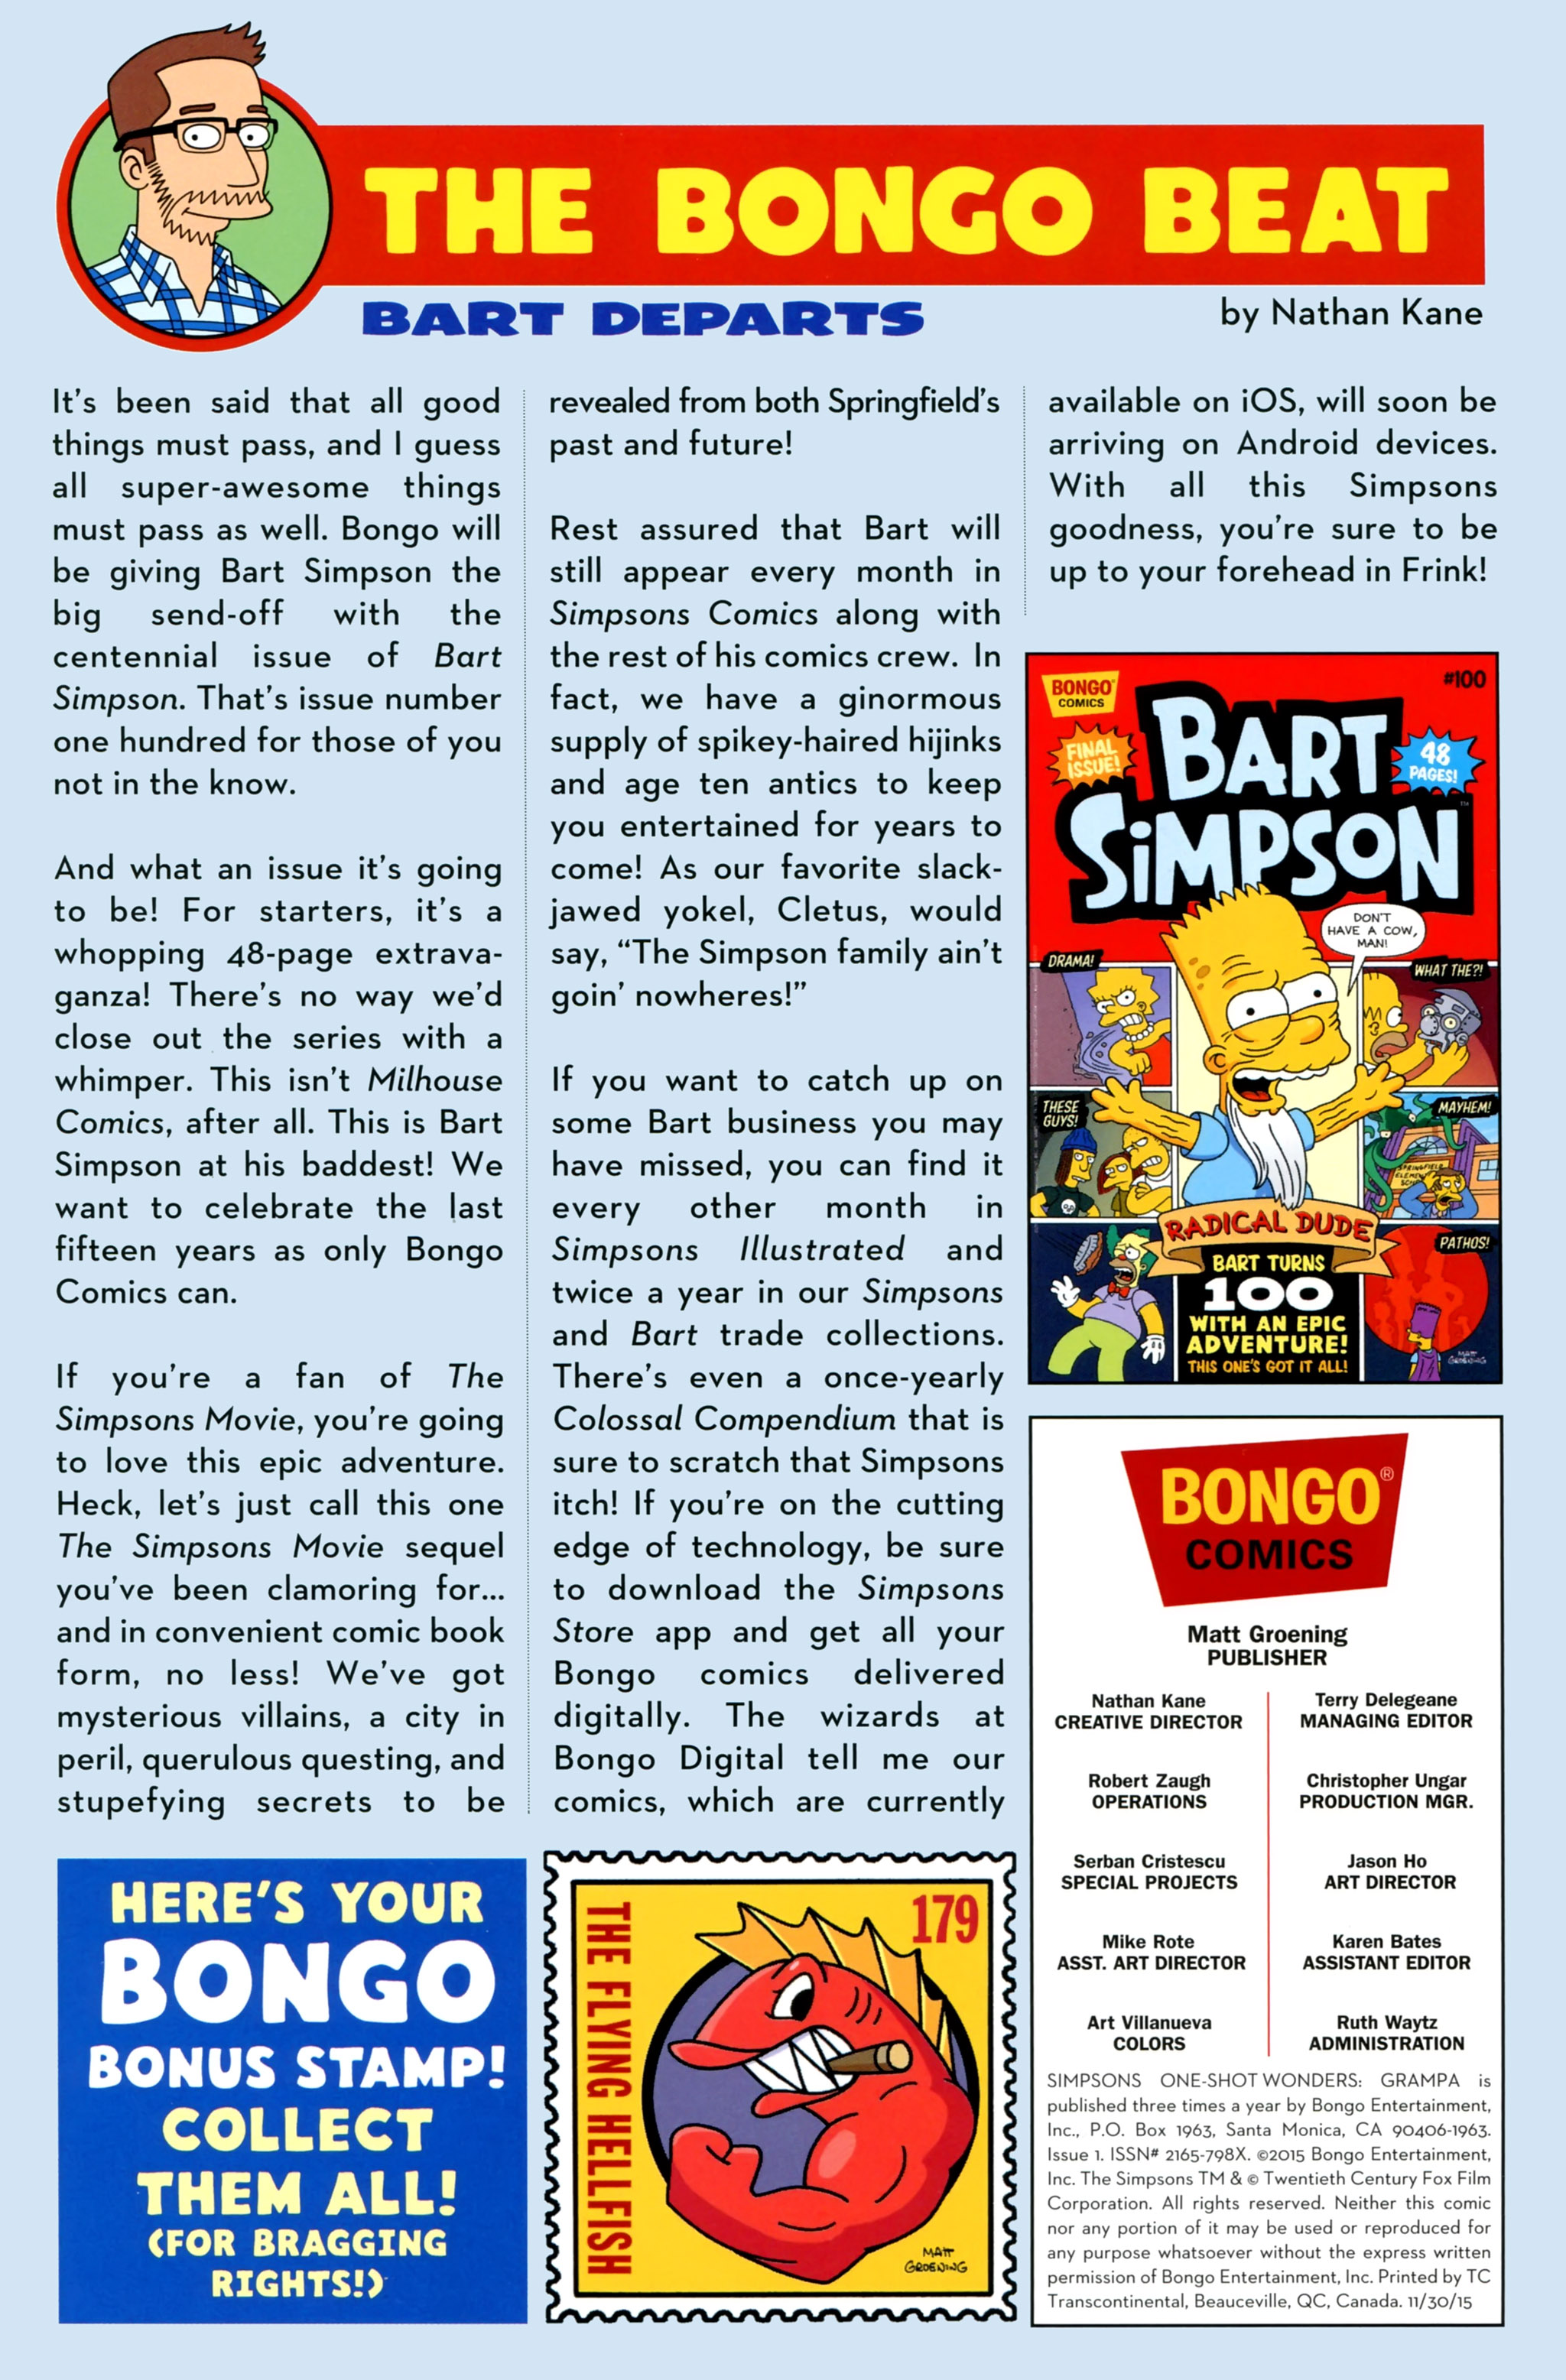 Read online Simpsons One-Shot Wonders: Grampa comic -  Issue # Full - 27